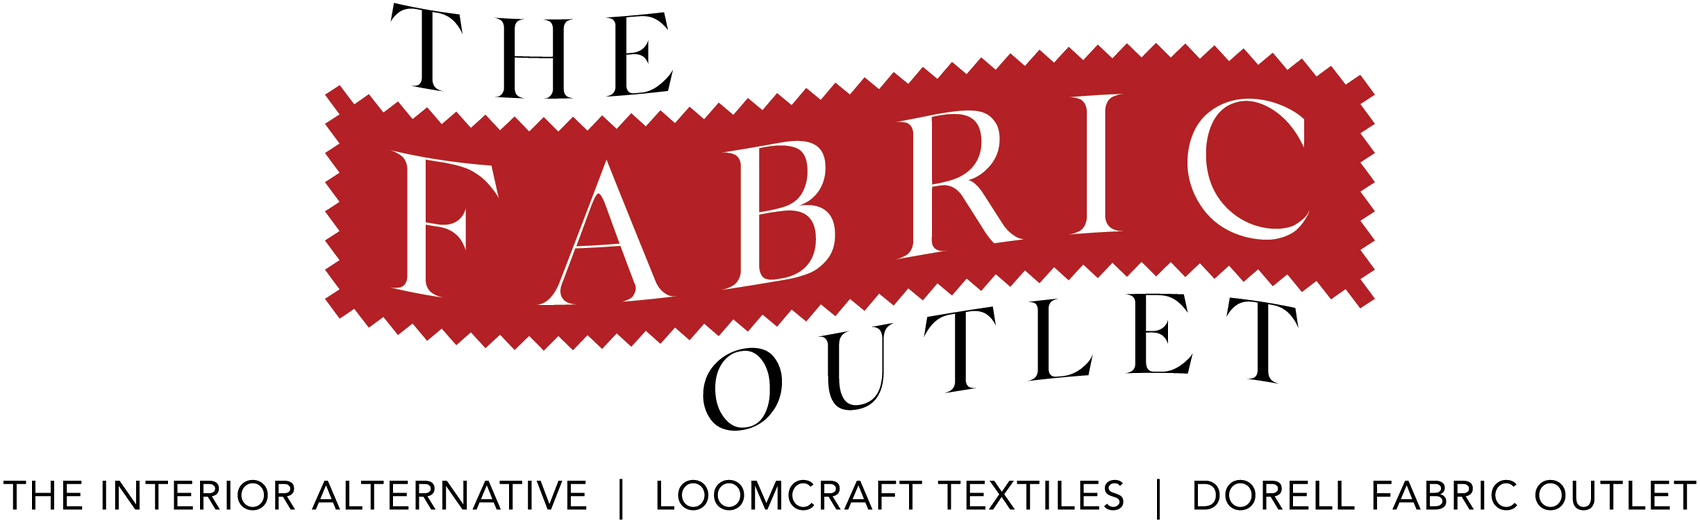 Upholstery Fashion Fabric, Luxury Brand, Bag Fabric, Wholesale